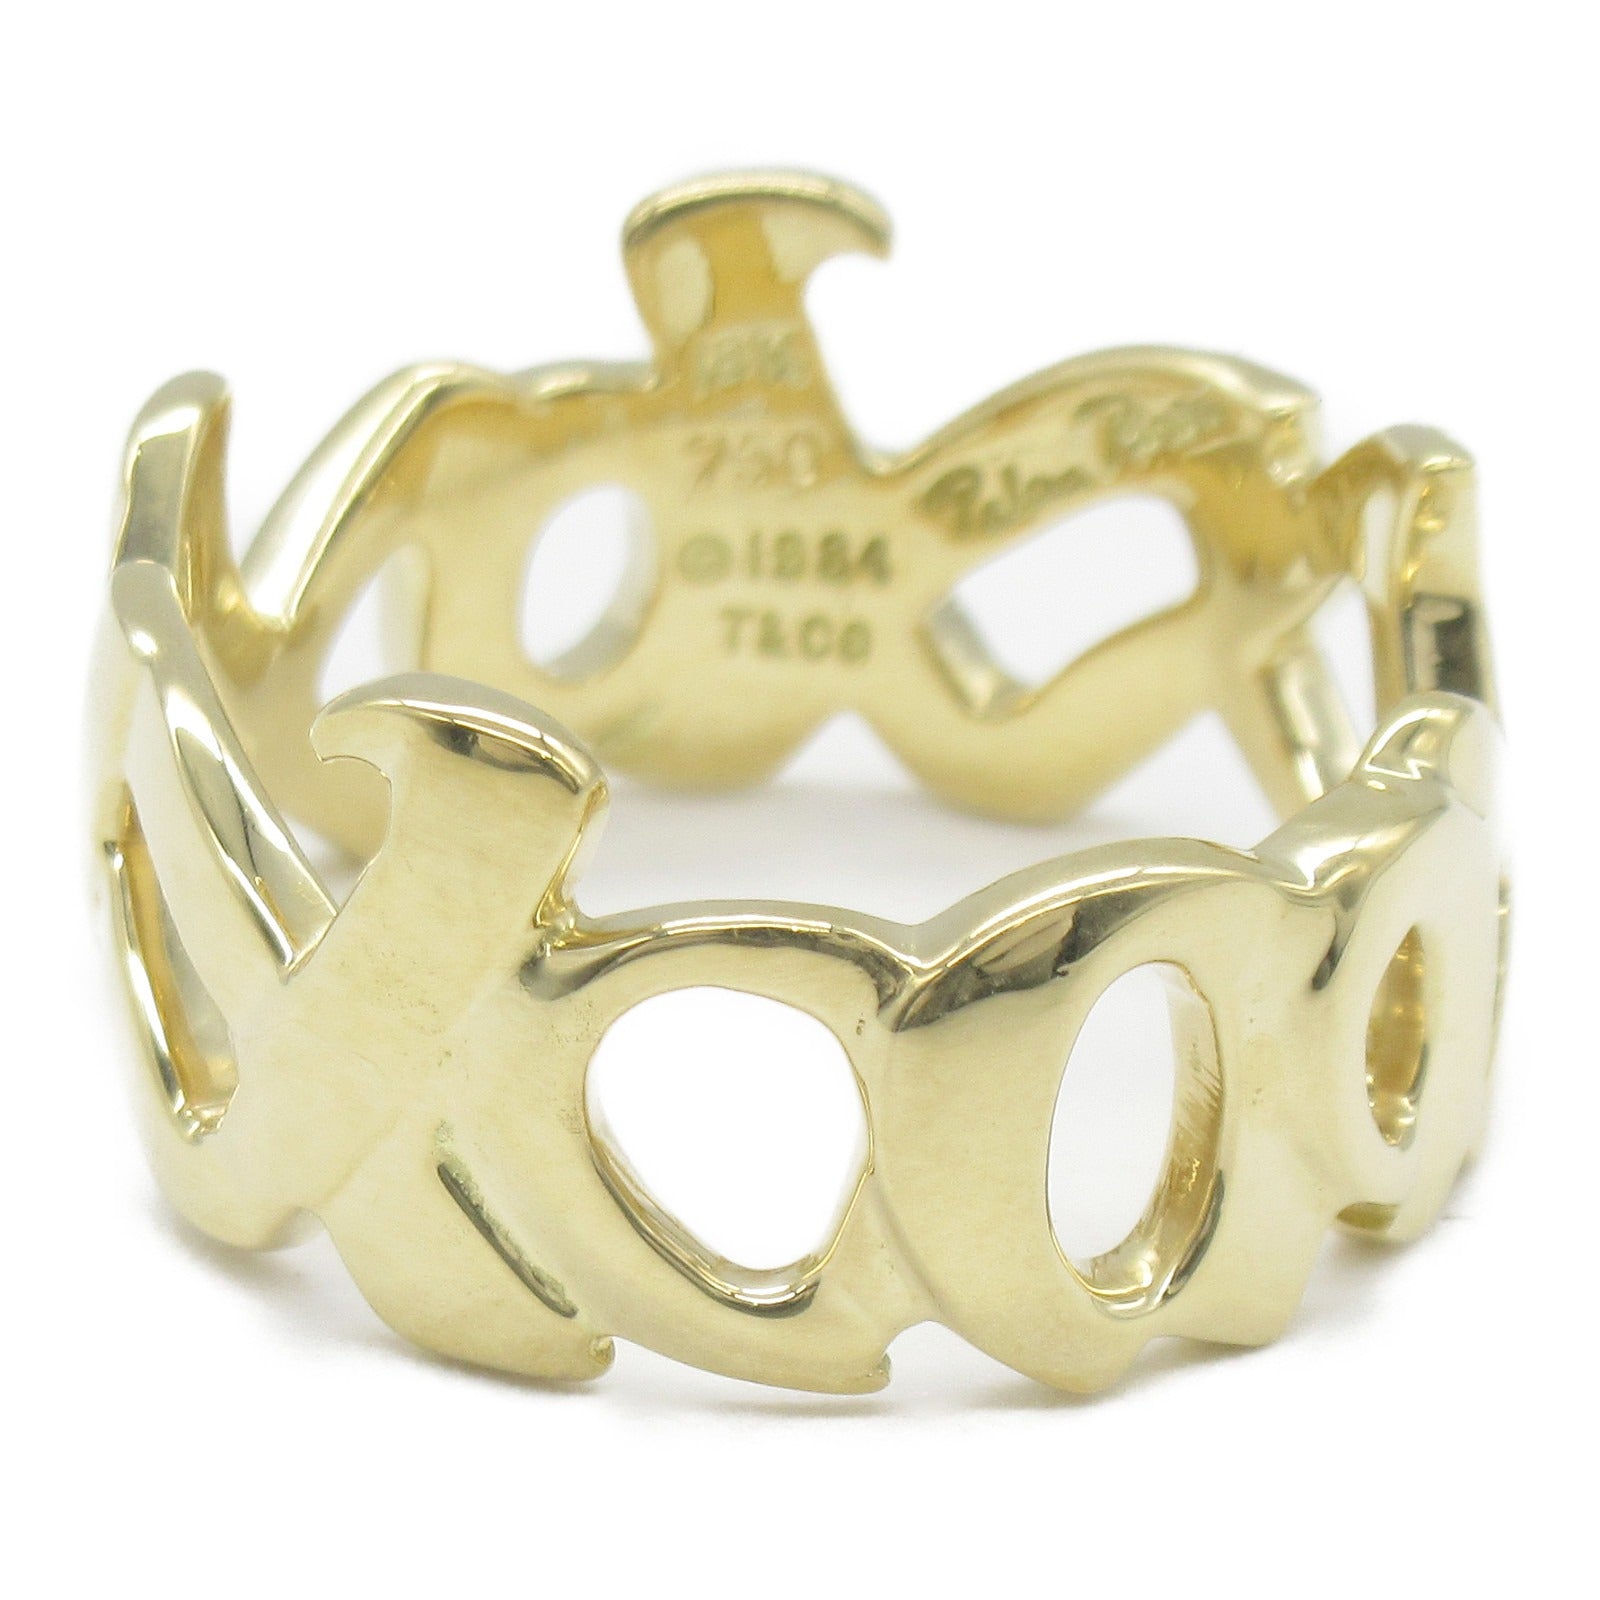 Tiffany TIFFANY&amp;CO  &amp; Kiss Ring Ring Jewelry K18 (Yellow G)   G